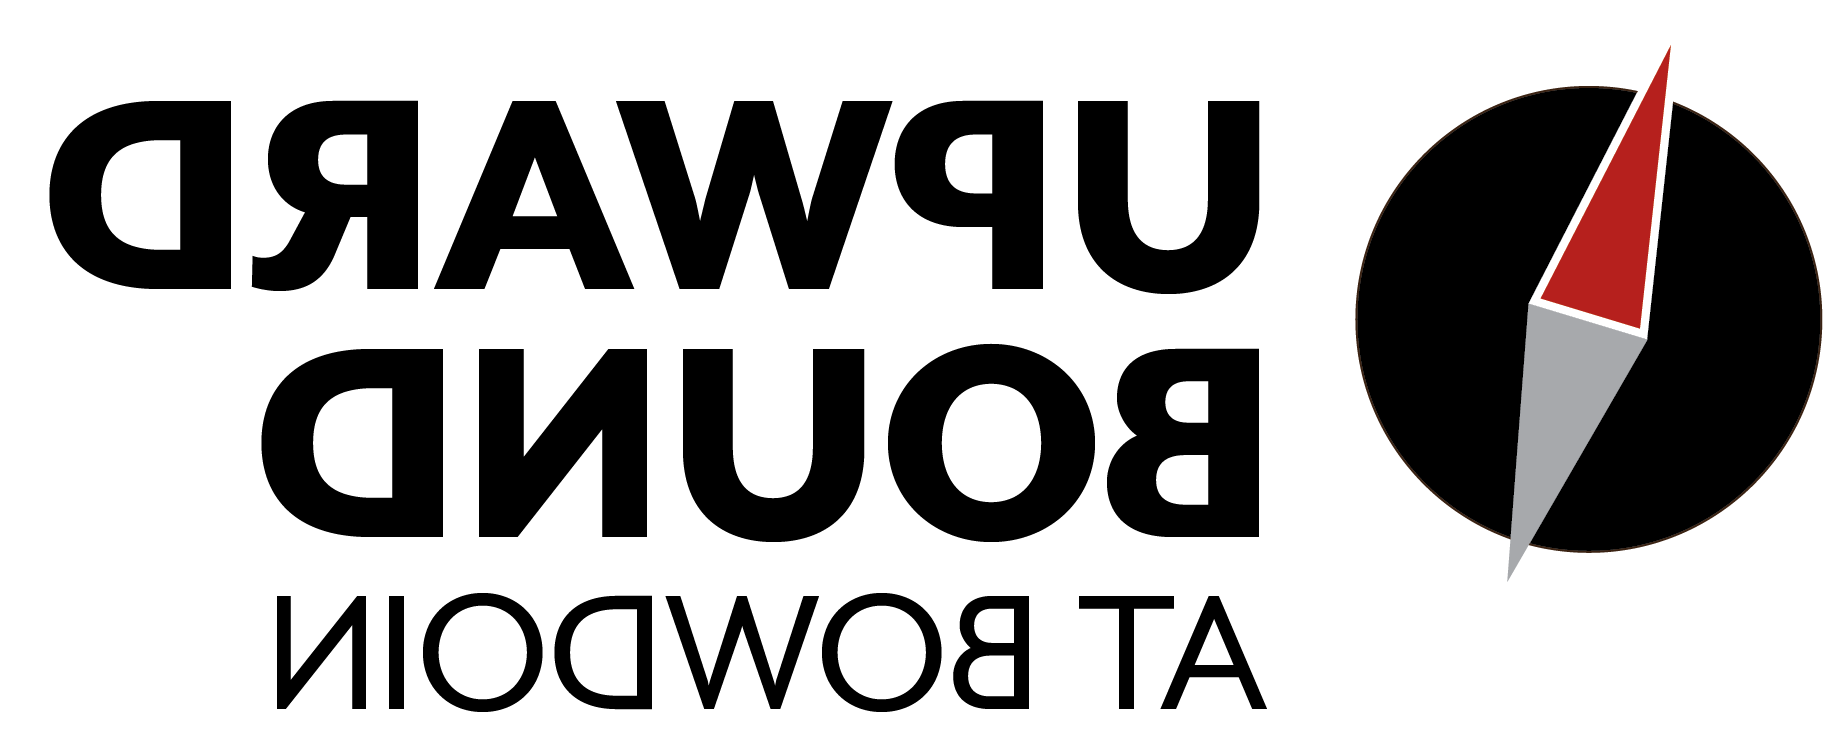 上界Logo图像